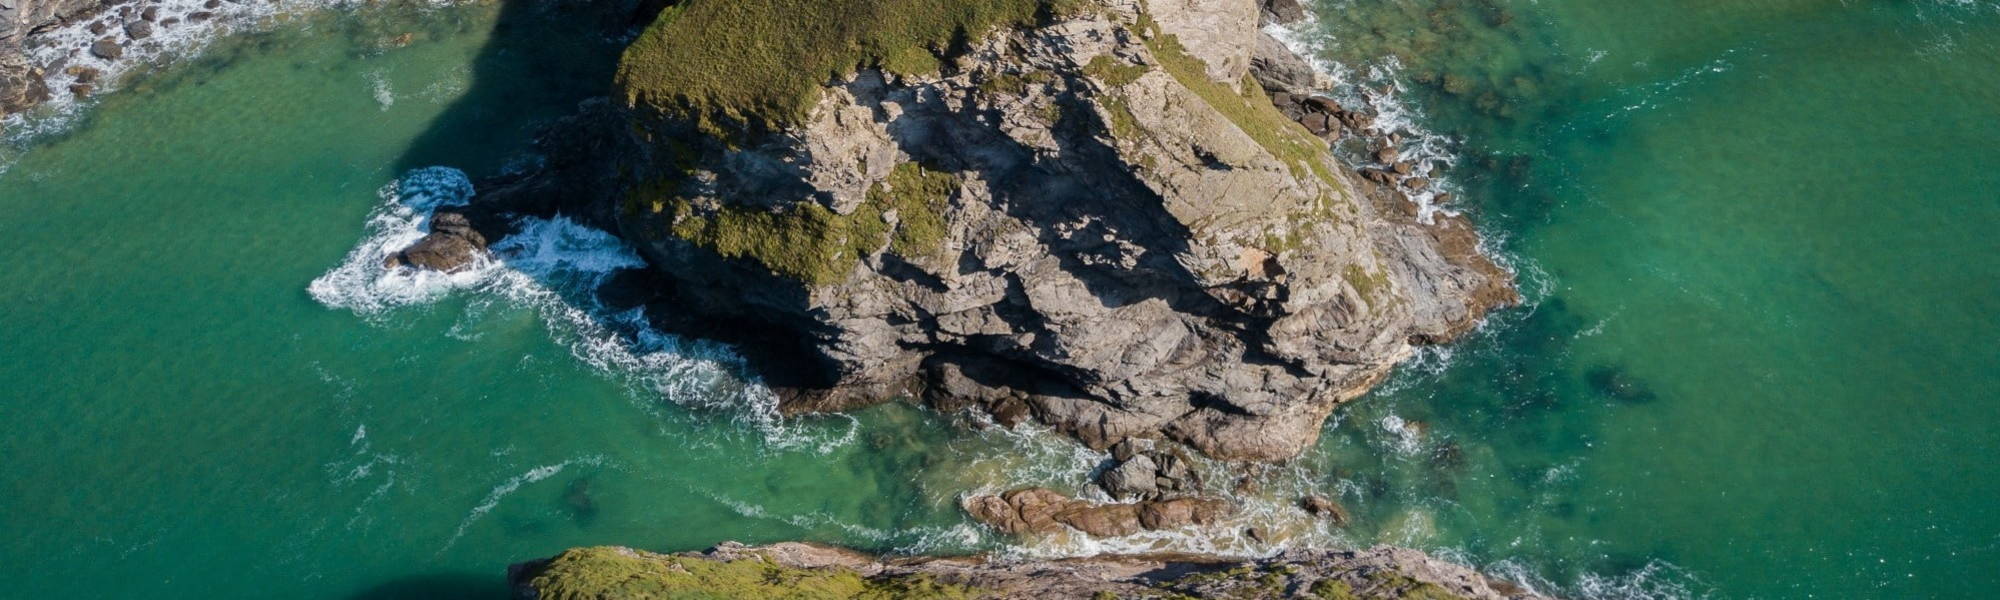 waves crashing on the Cornish coastline, cliffs and ocean 